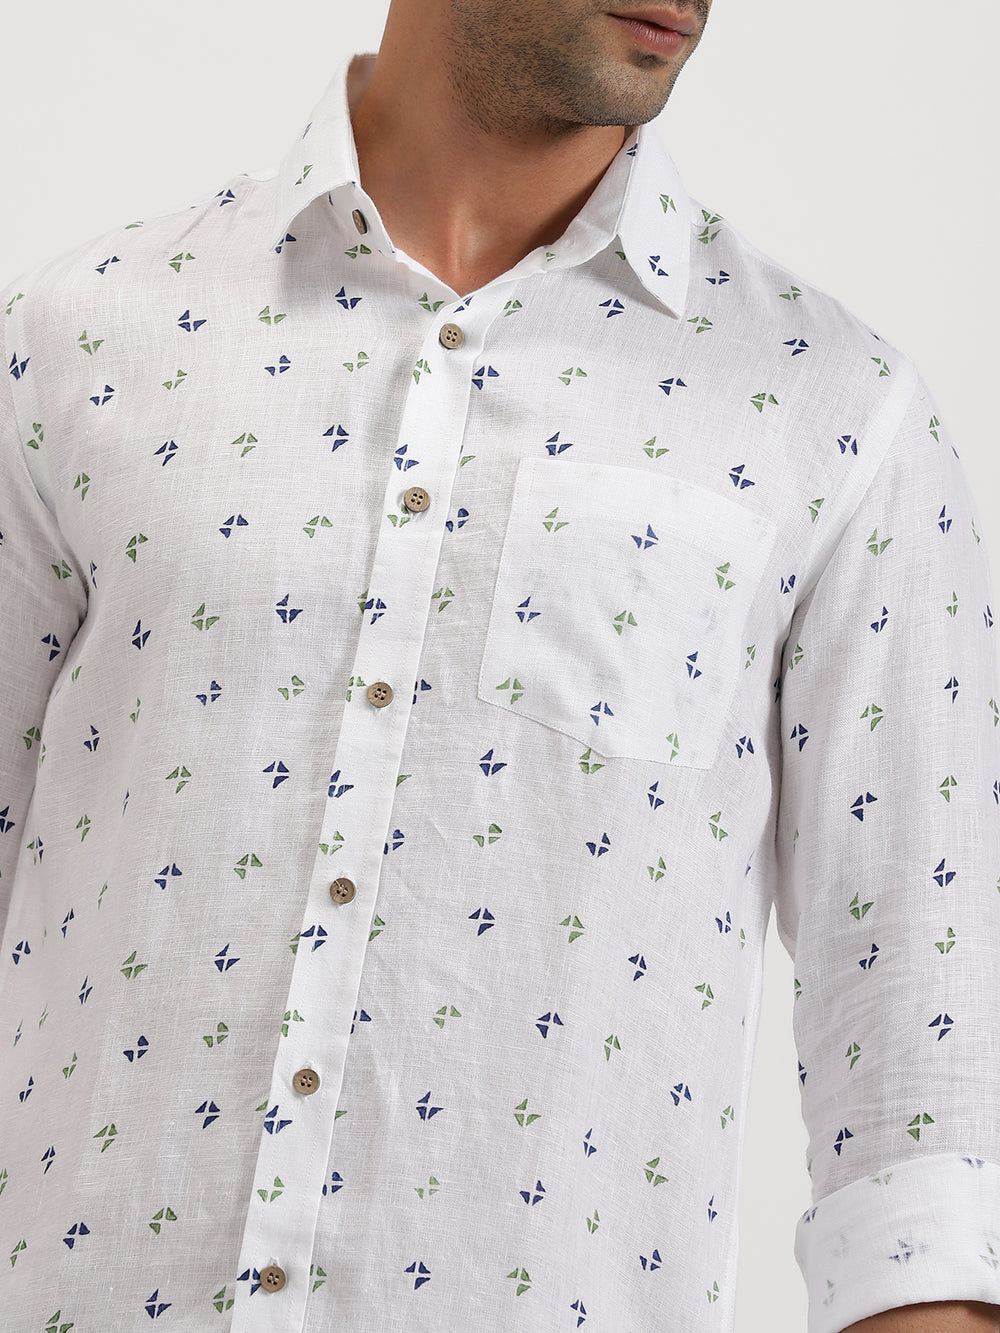 Elies - Pure Linen Block Printed Full Sleeve Shirt - Navy & Green